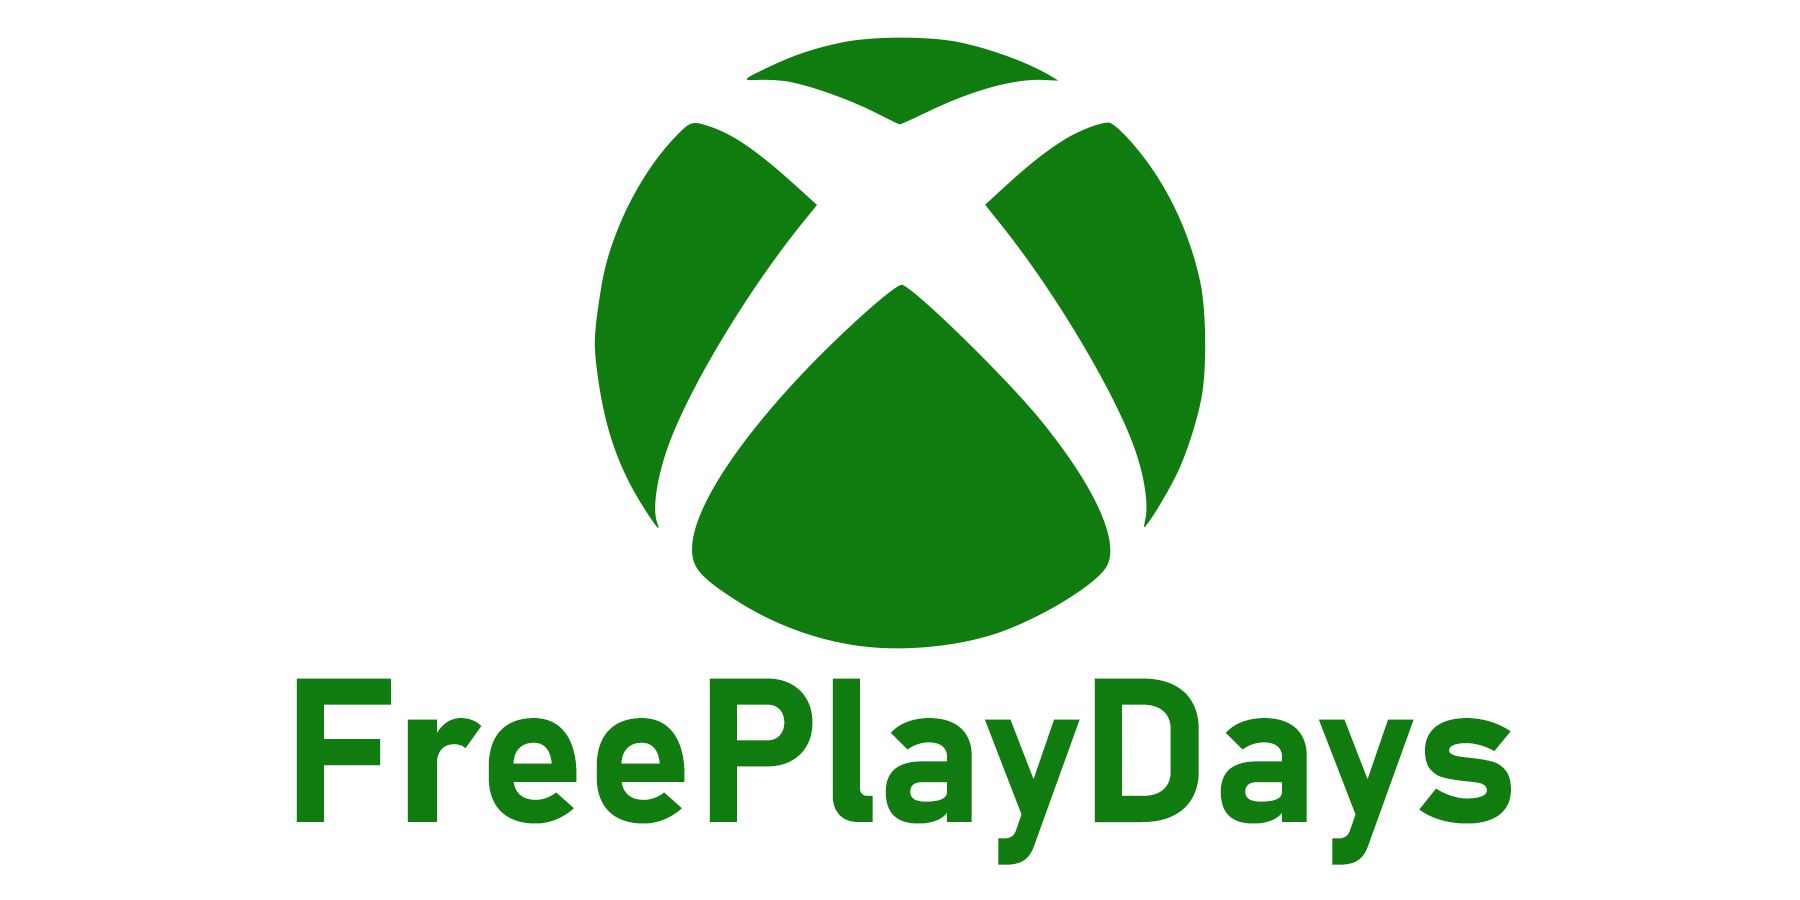 Xbox logo emblem above FreePlayDays tagline on white background